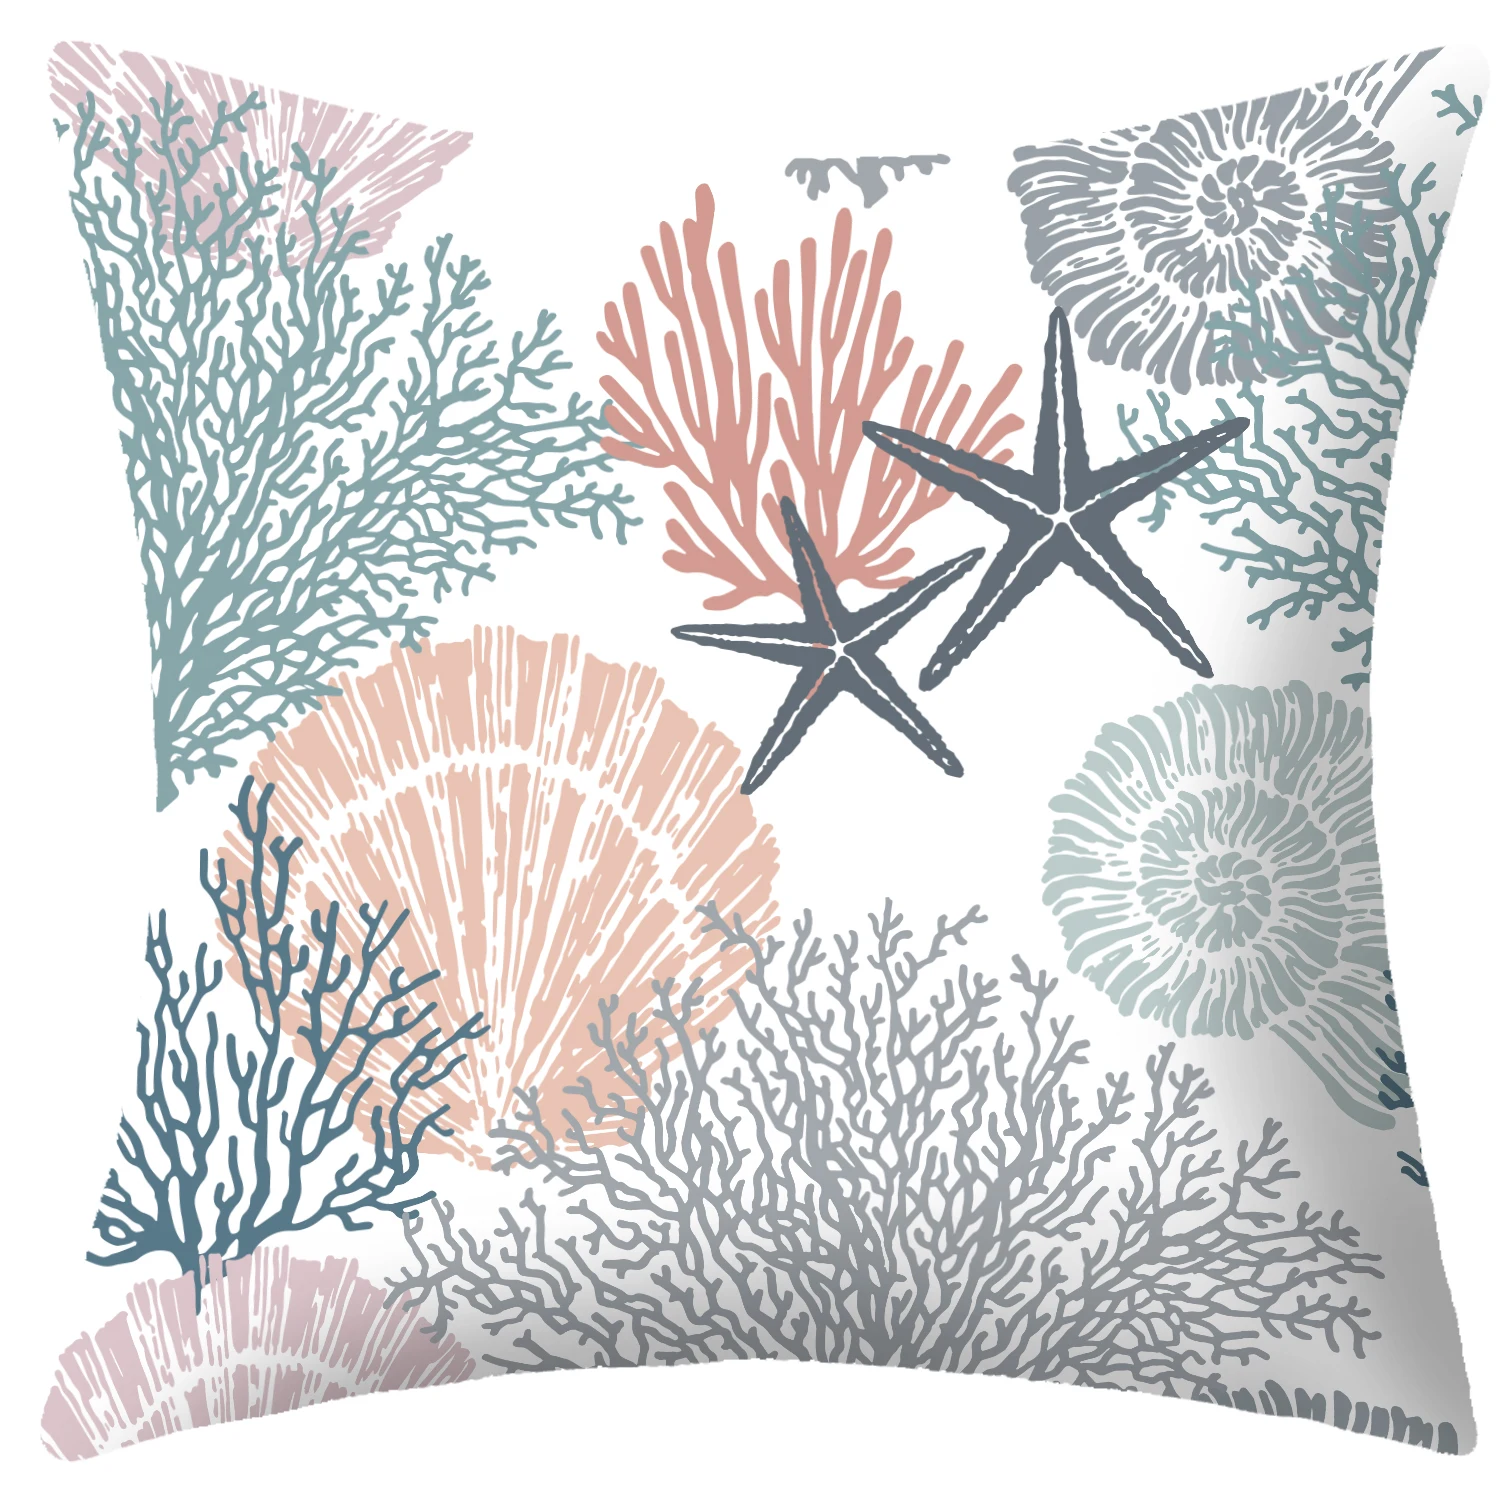 

Nautical Coastal Sofa Throw Pillow Covers Outdoor Decorative Ocean Themed Cushion Cover Beach Starfish Couch Pillow Cases